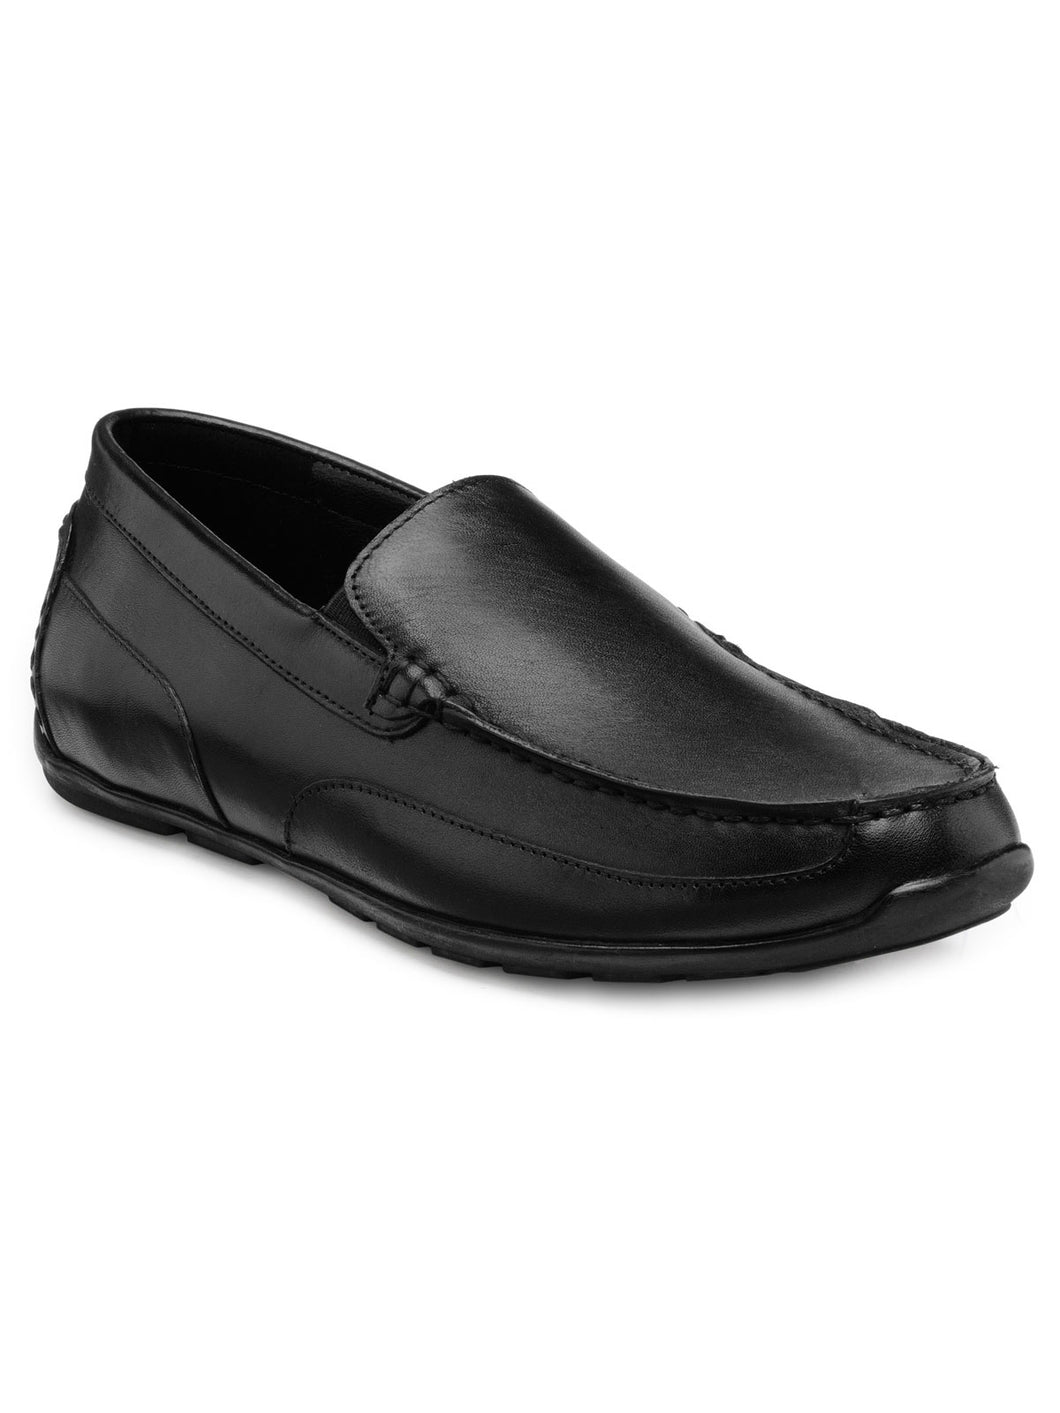 Teakwood Leather Men's Black Slip-ons Shoes